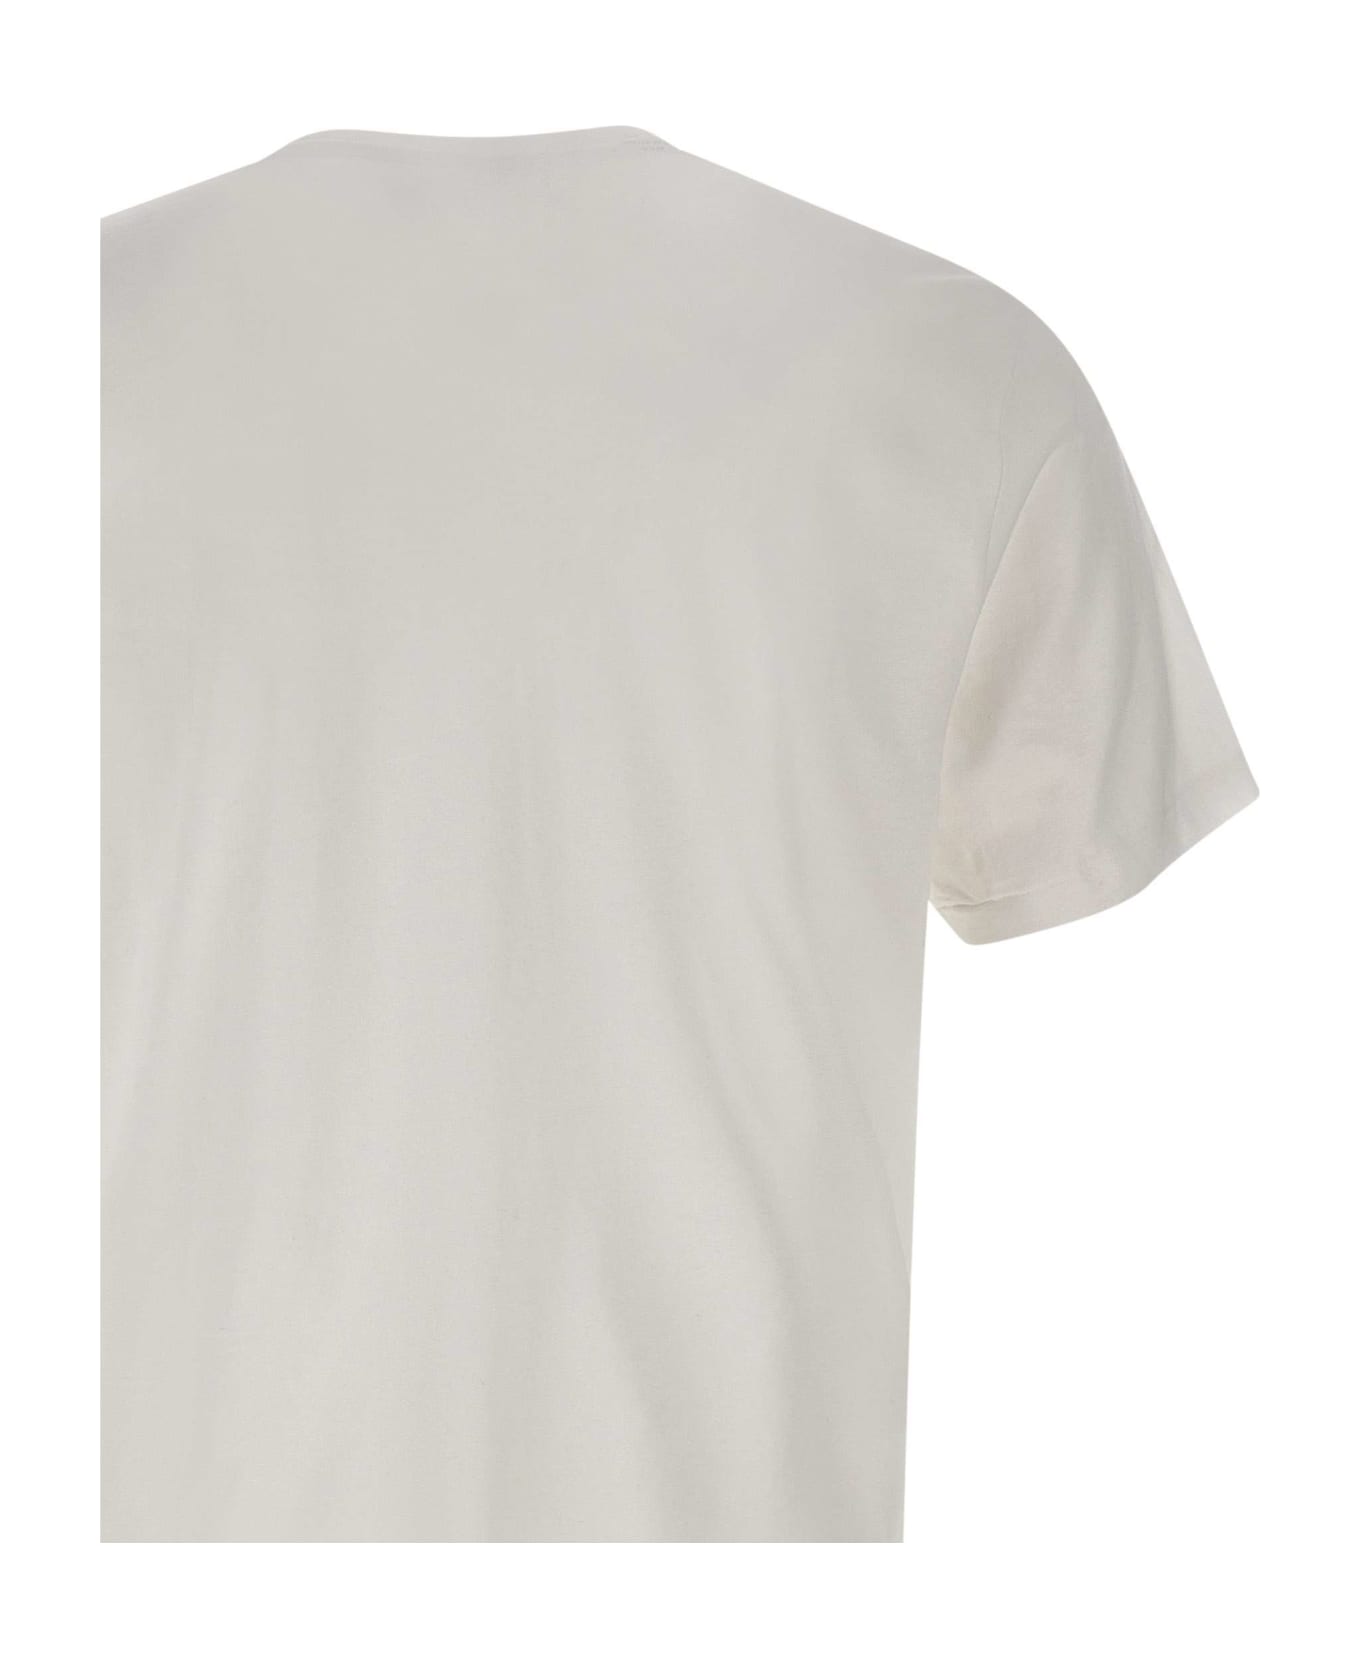 Polo Ralph Lauren "core Replen" Cotton T-shirt - WHITE